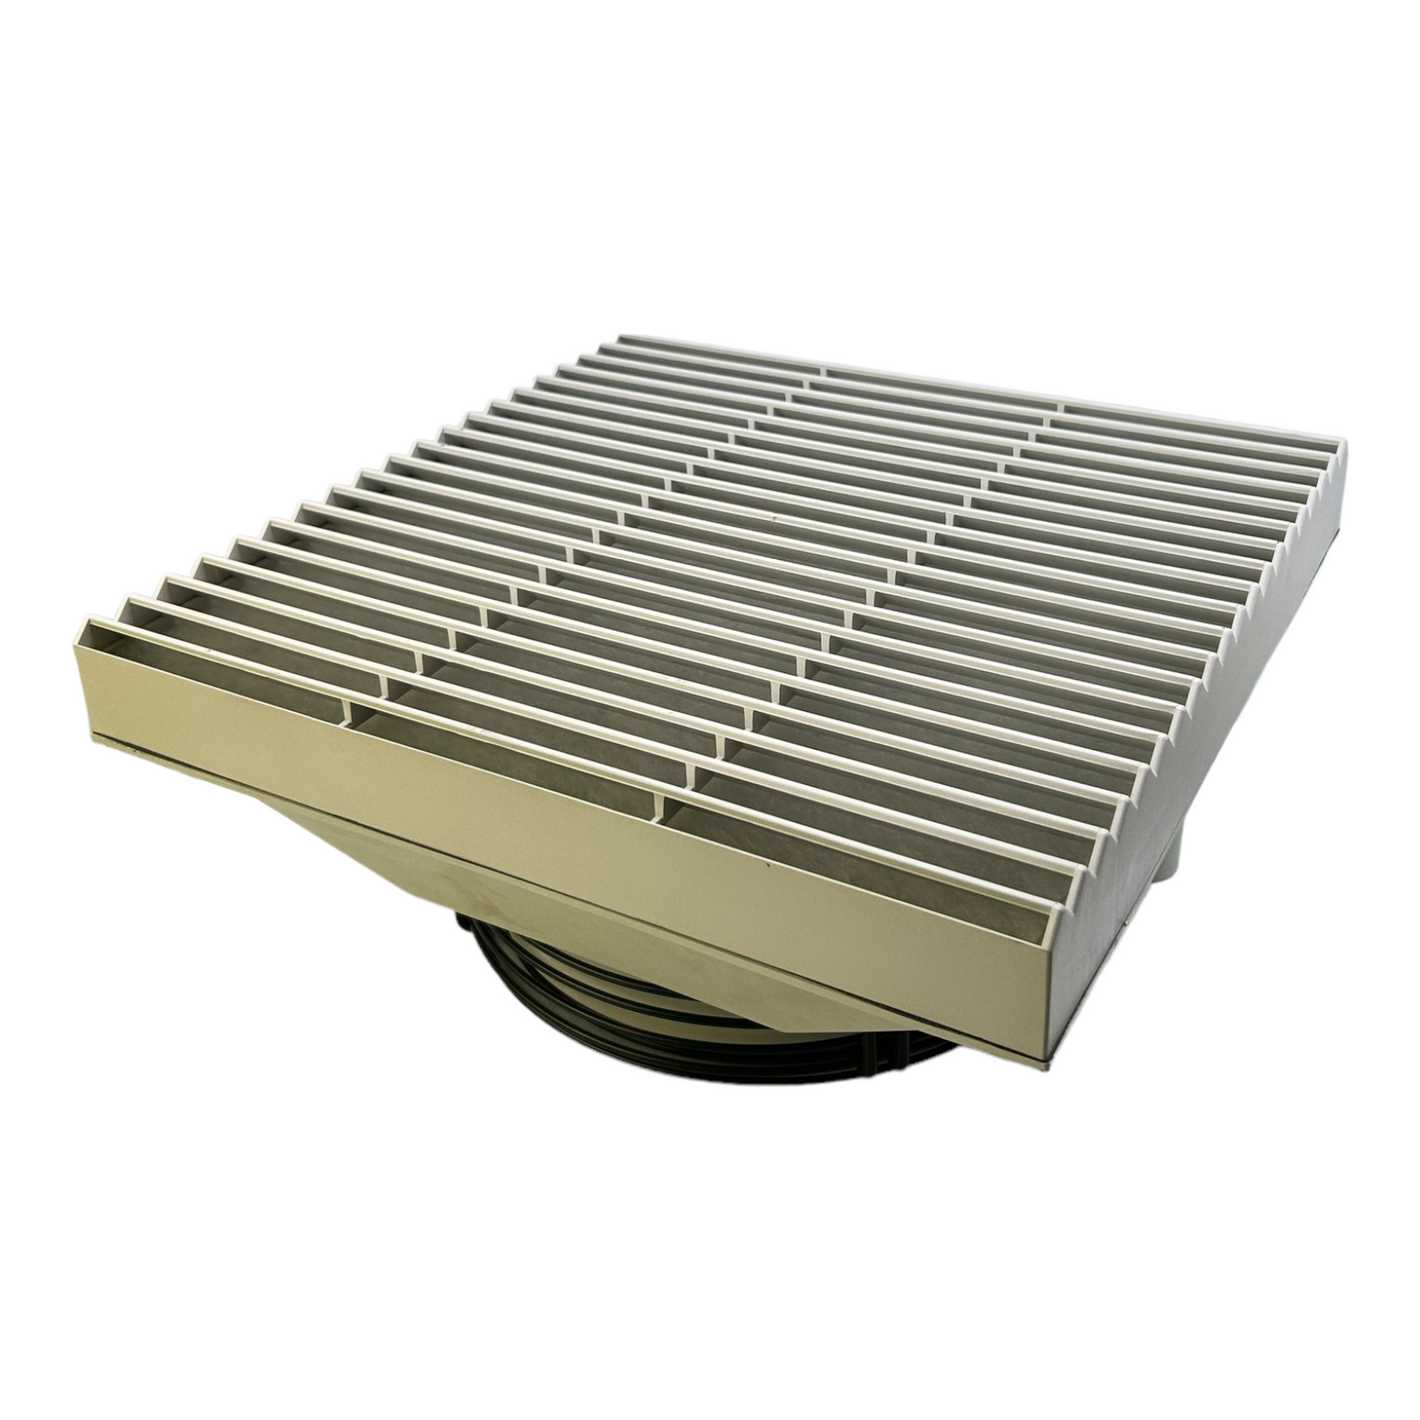 Cosmotec GRV_300A filter fan 230V for industrial use Filter fan 230V